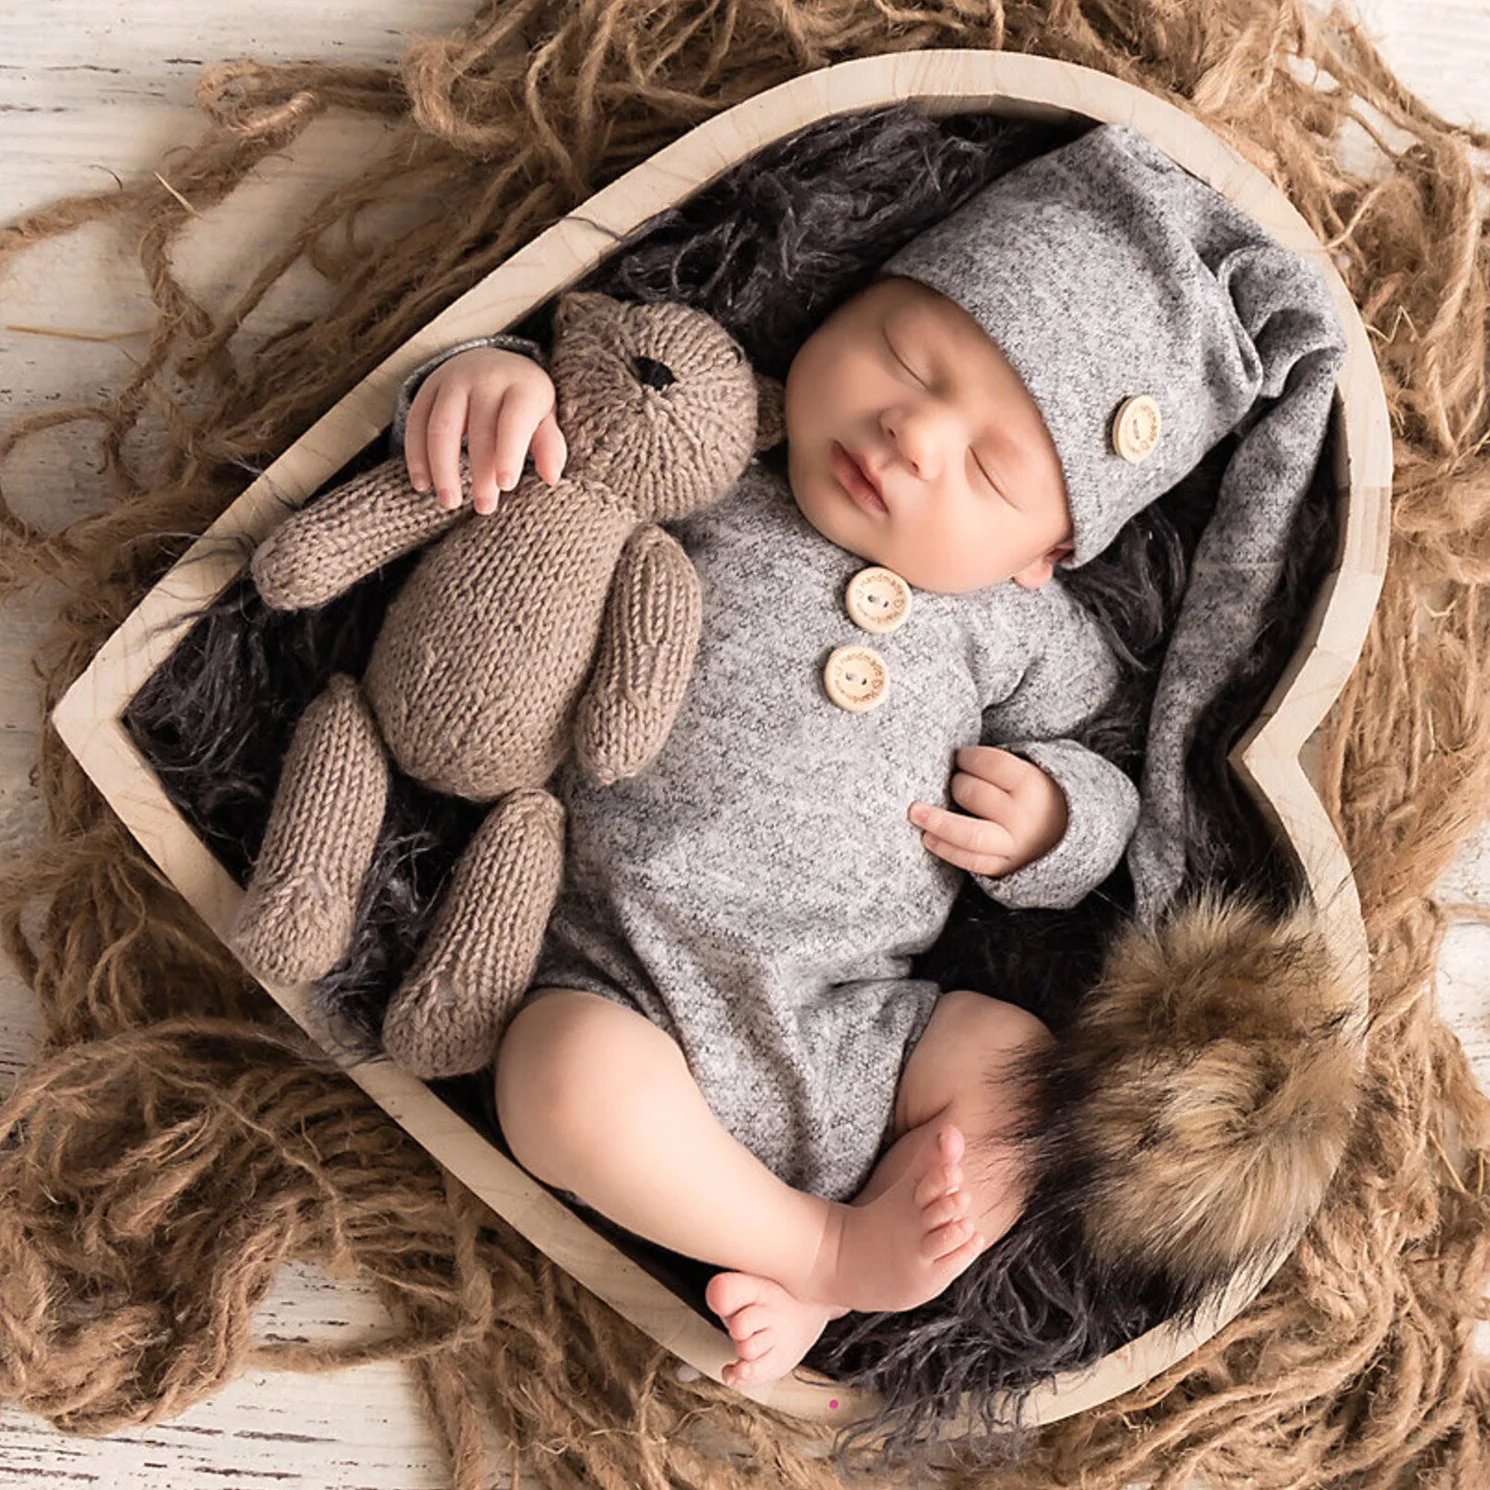 twin newborn photos Newborn Photography Props Romper Hat Pom Pom Fotografia Clothing Baby Photo Accessori Studio Shoot Clothes Boy Outfit Costume infant photoshoot